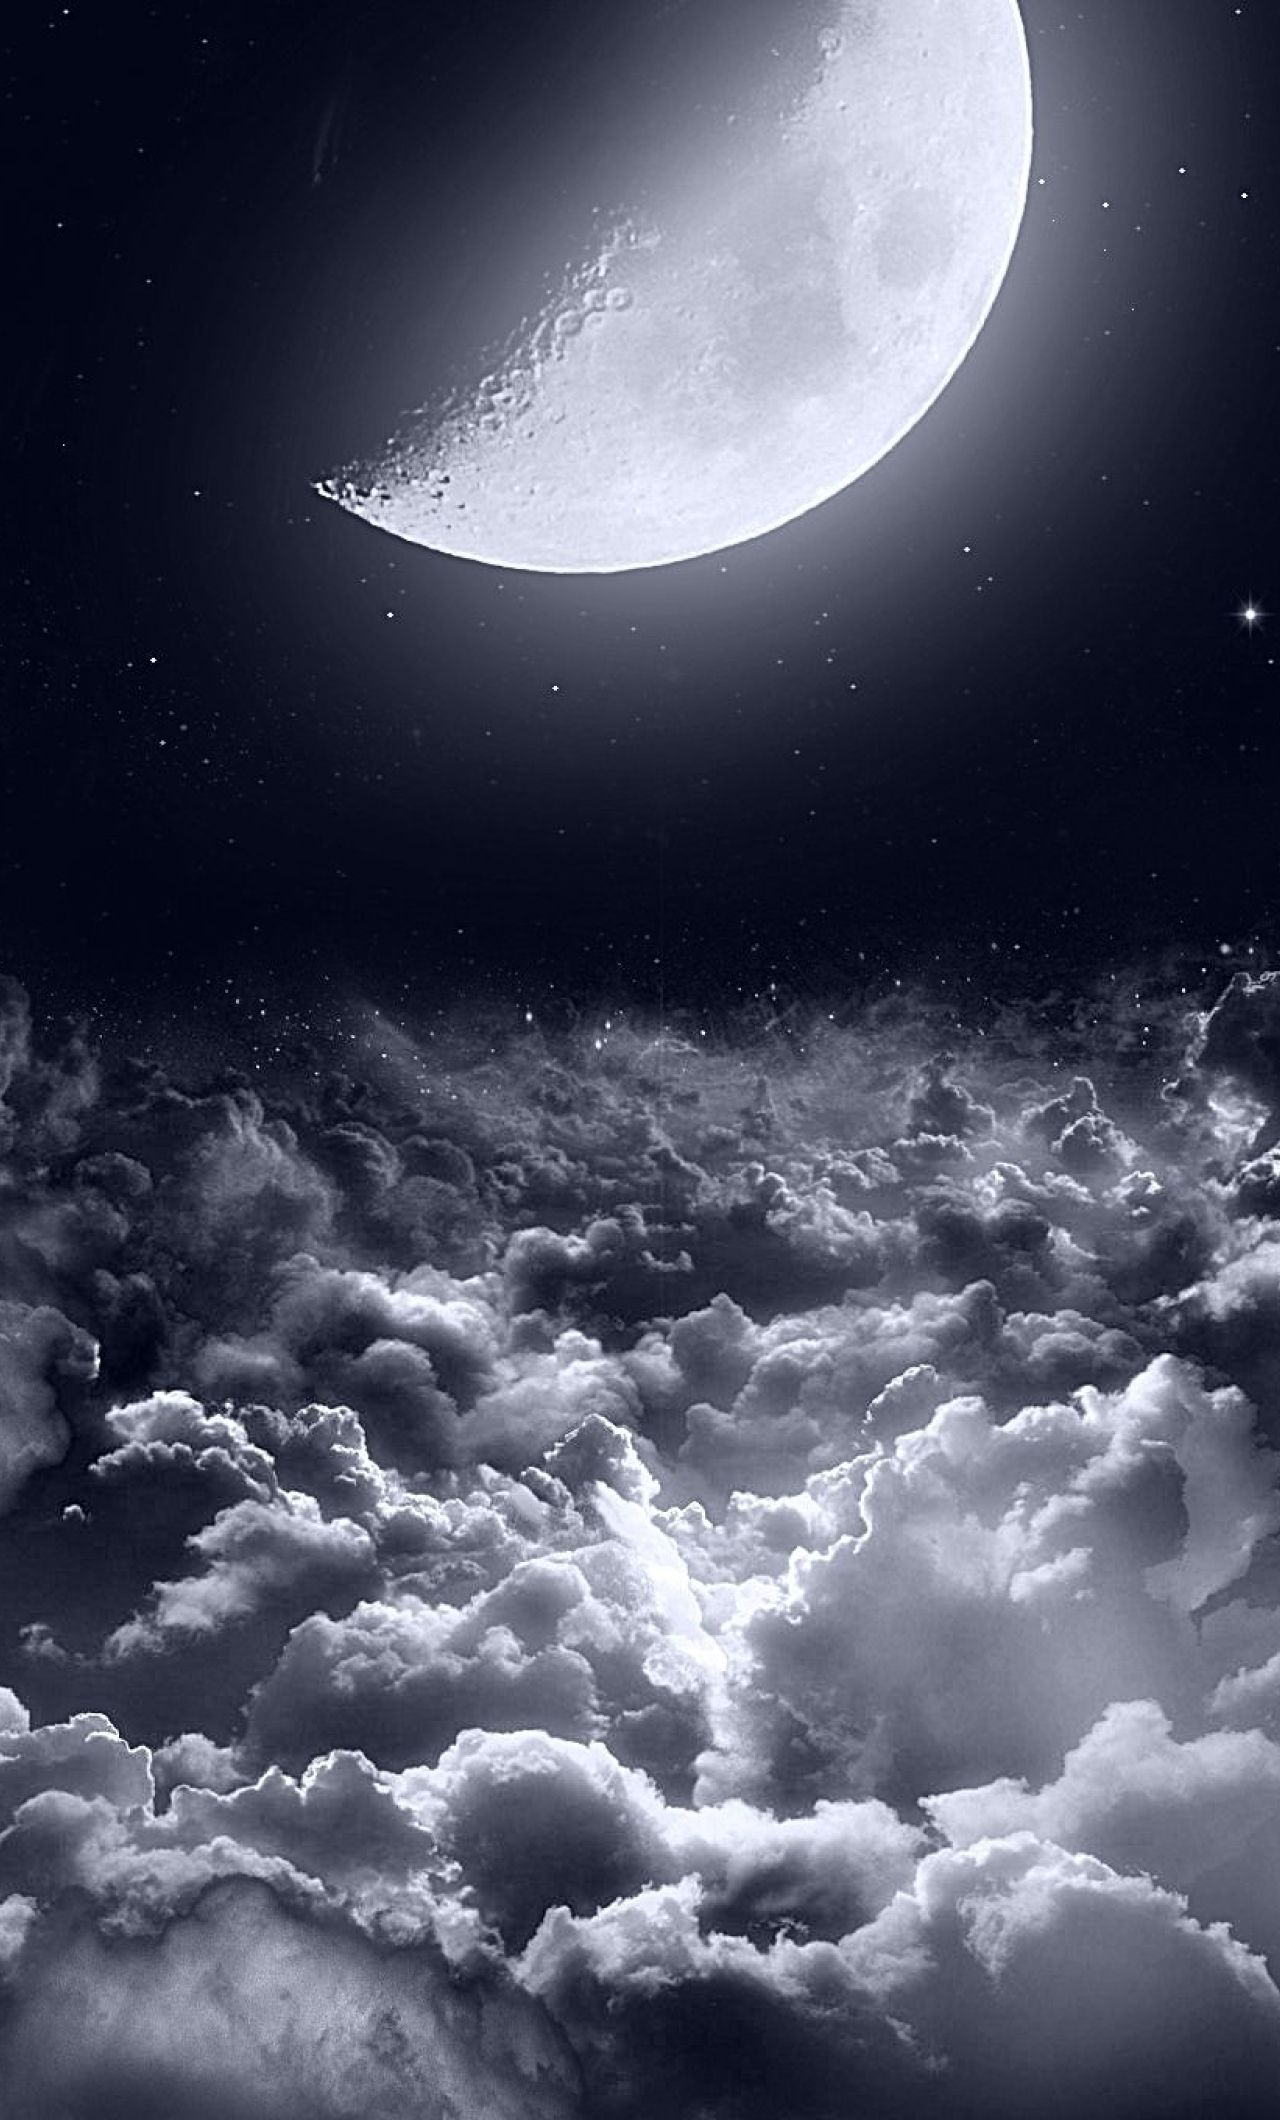 Half Moon Dark Night iPhone 6 plus Wallpaper, HD Nature 4K Wallpaper, Image, Photo and Background